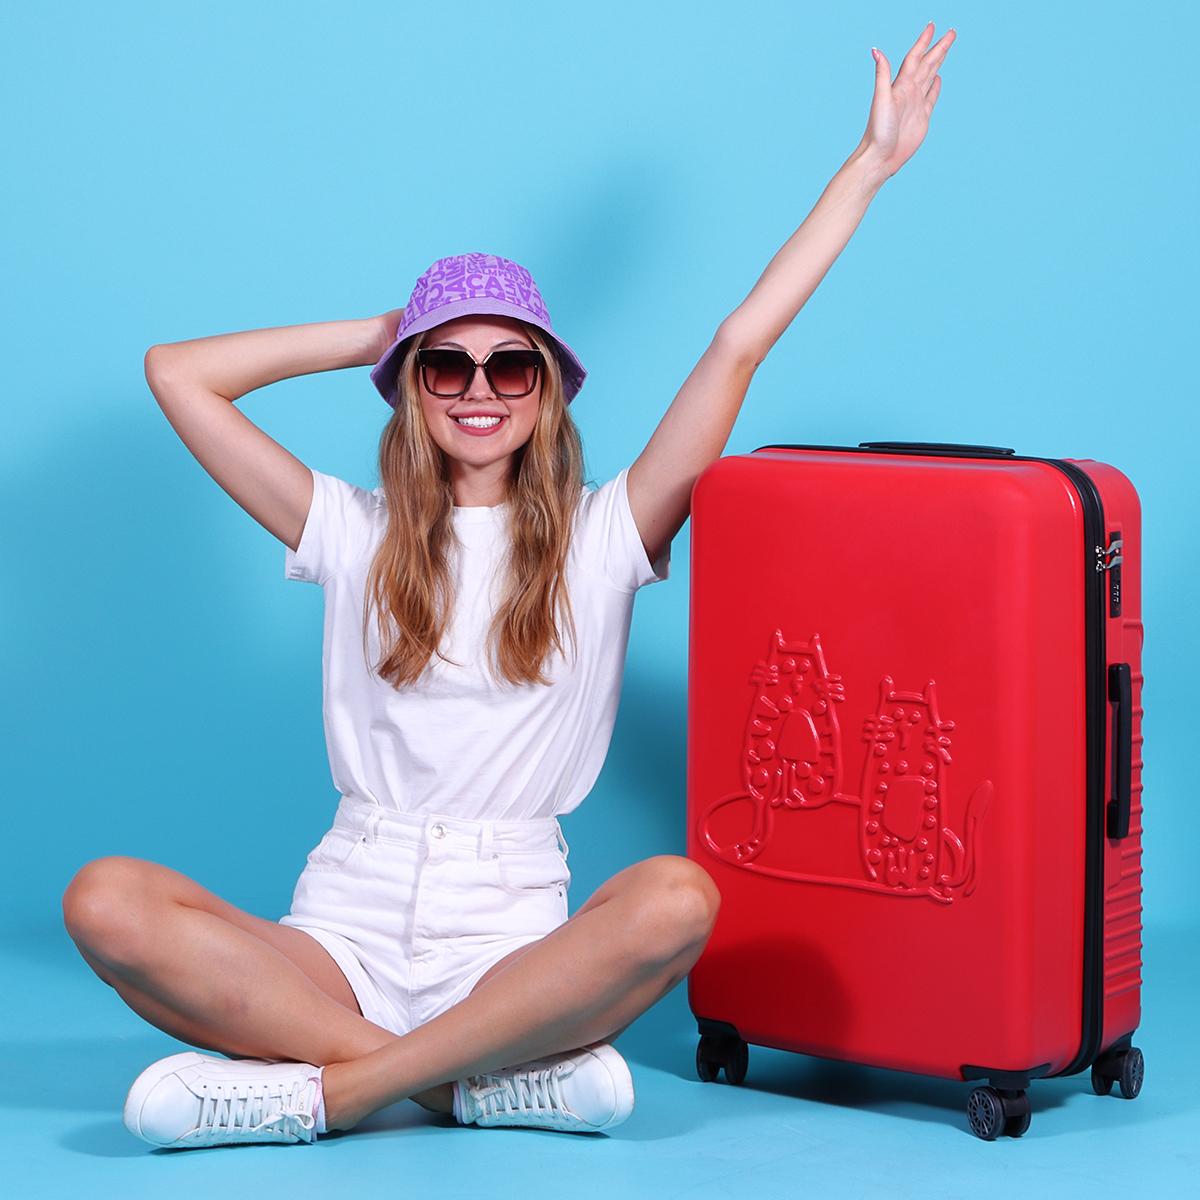 Biggdesign Cats Suitcase Luggage, Hardshell Luggage with Spinner Wheel, Travel Suitcase, Lock System, Lightweight, Red, Medium, 24 Inch